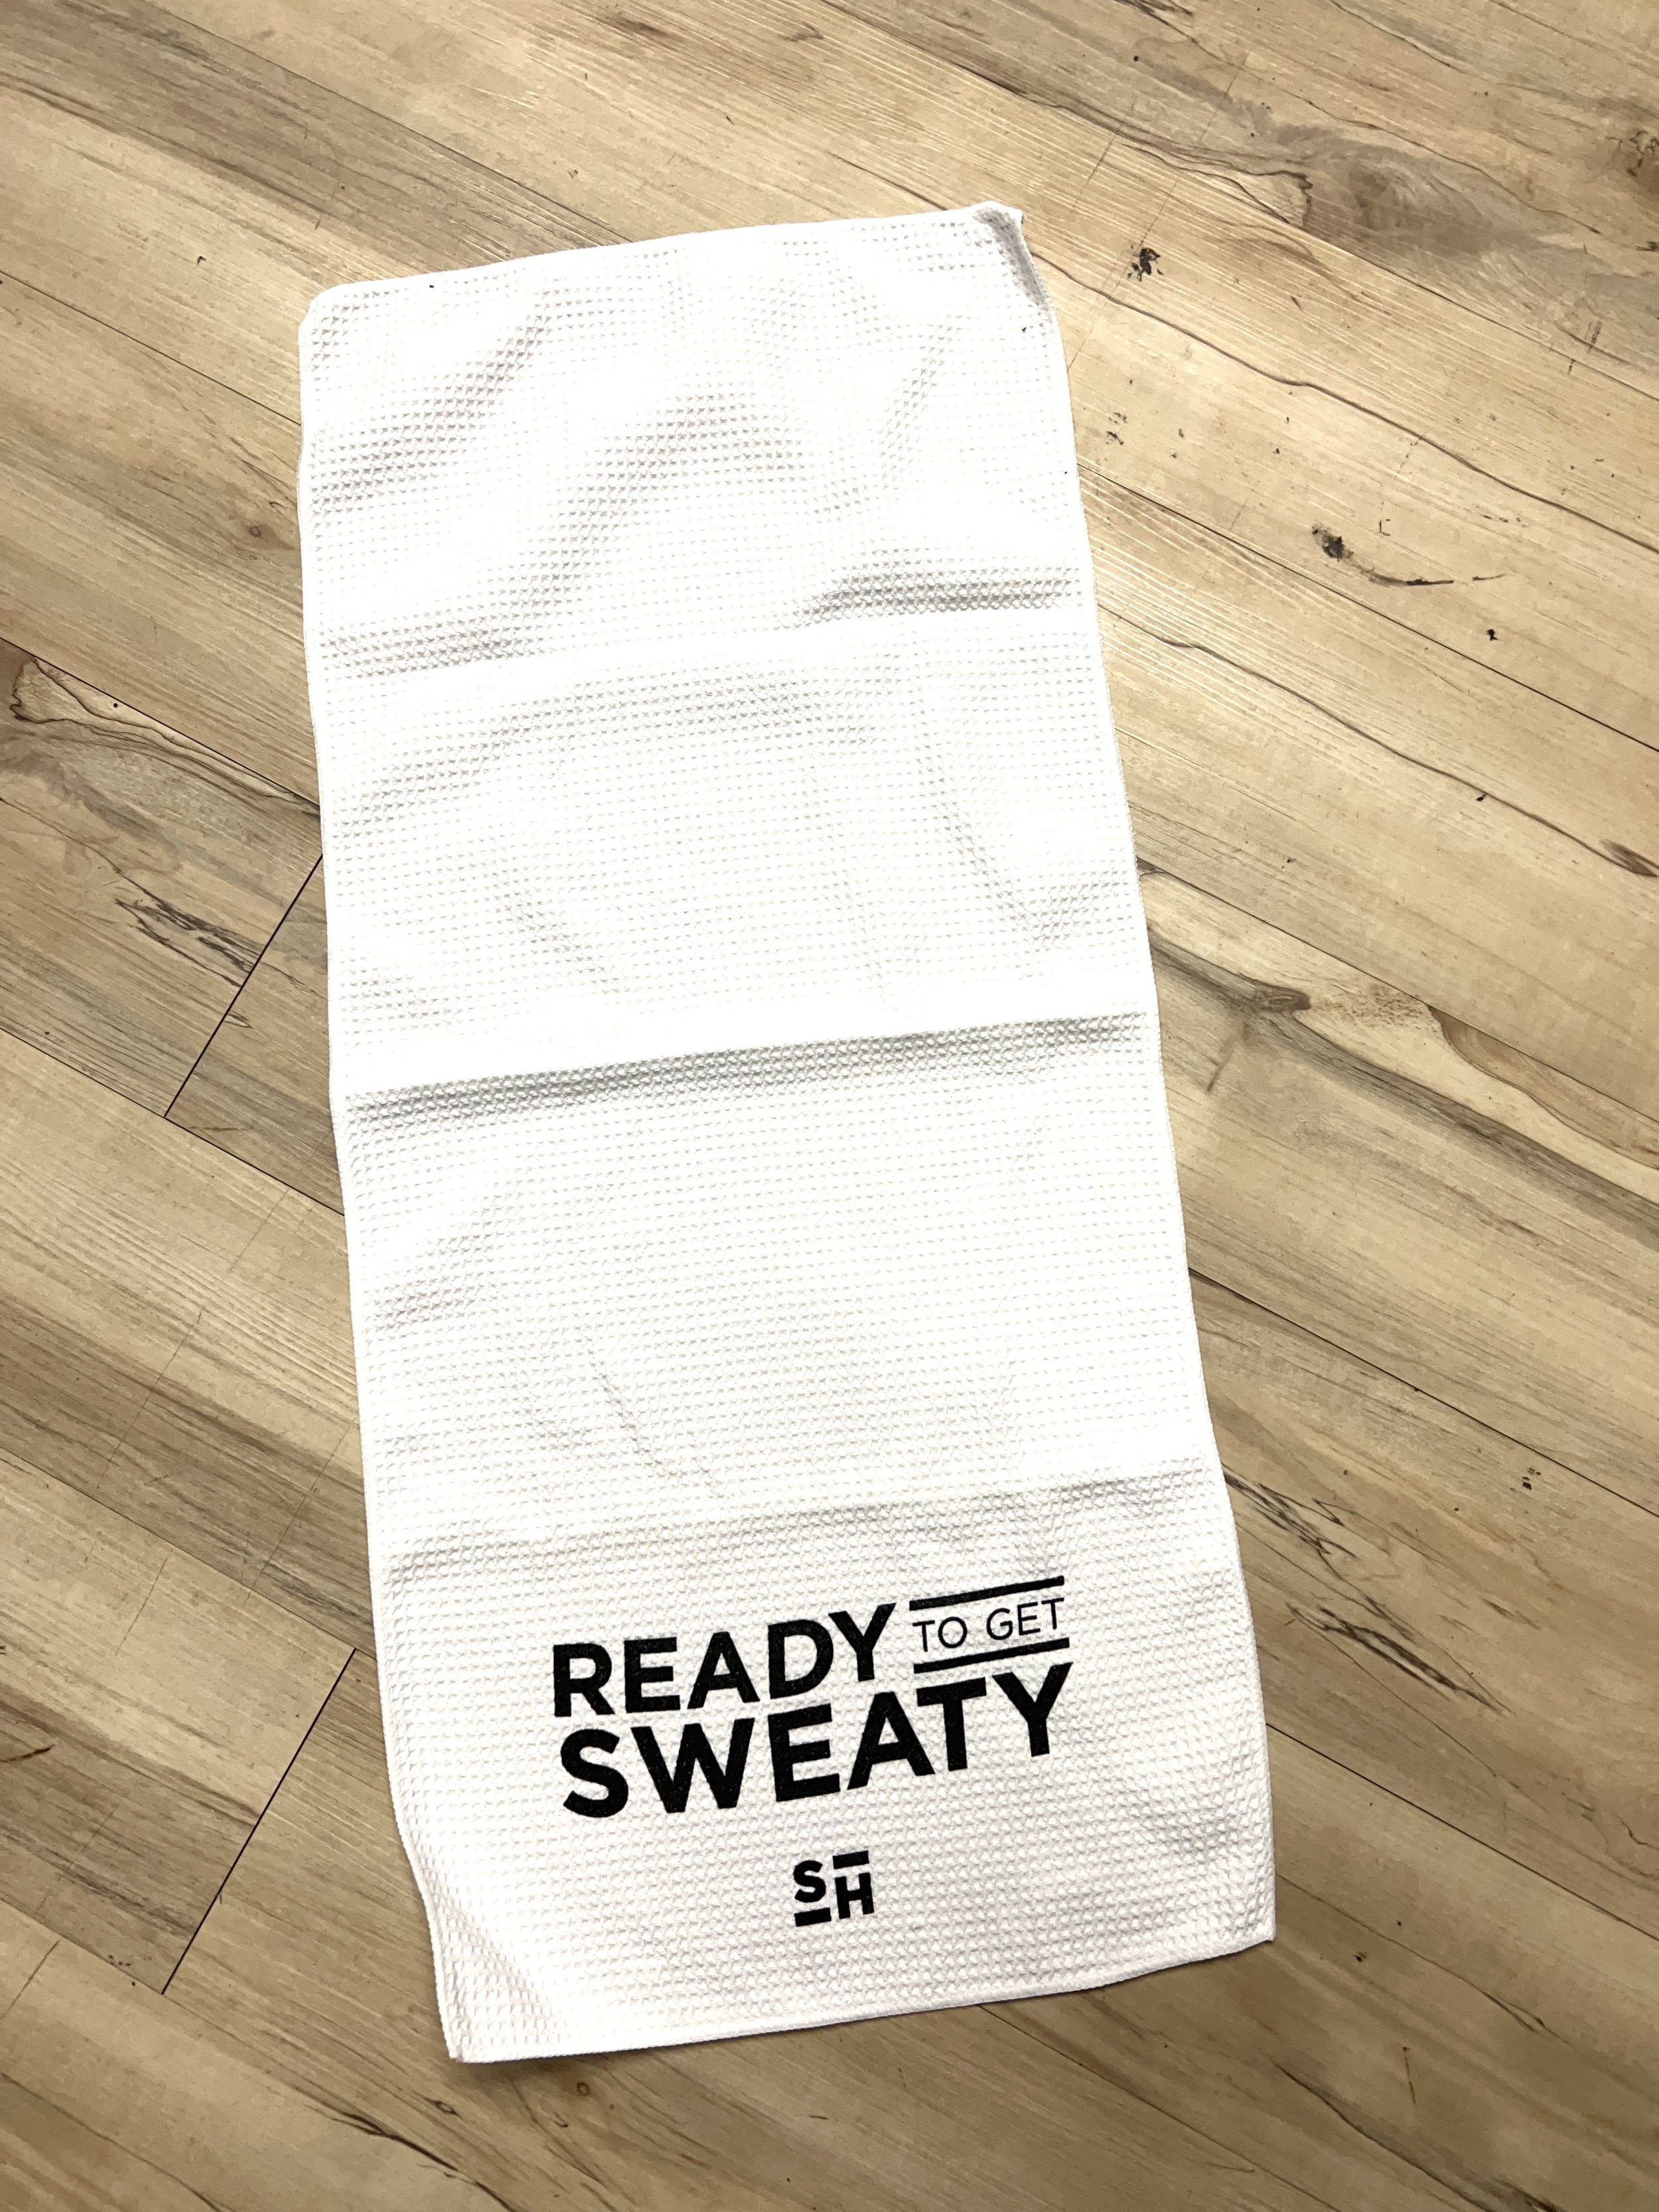 Sweat Towel — Studio Hustle